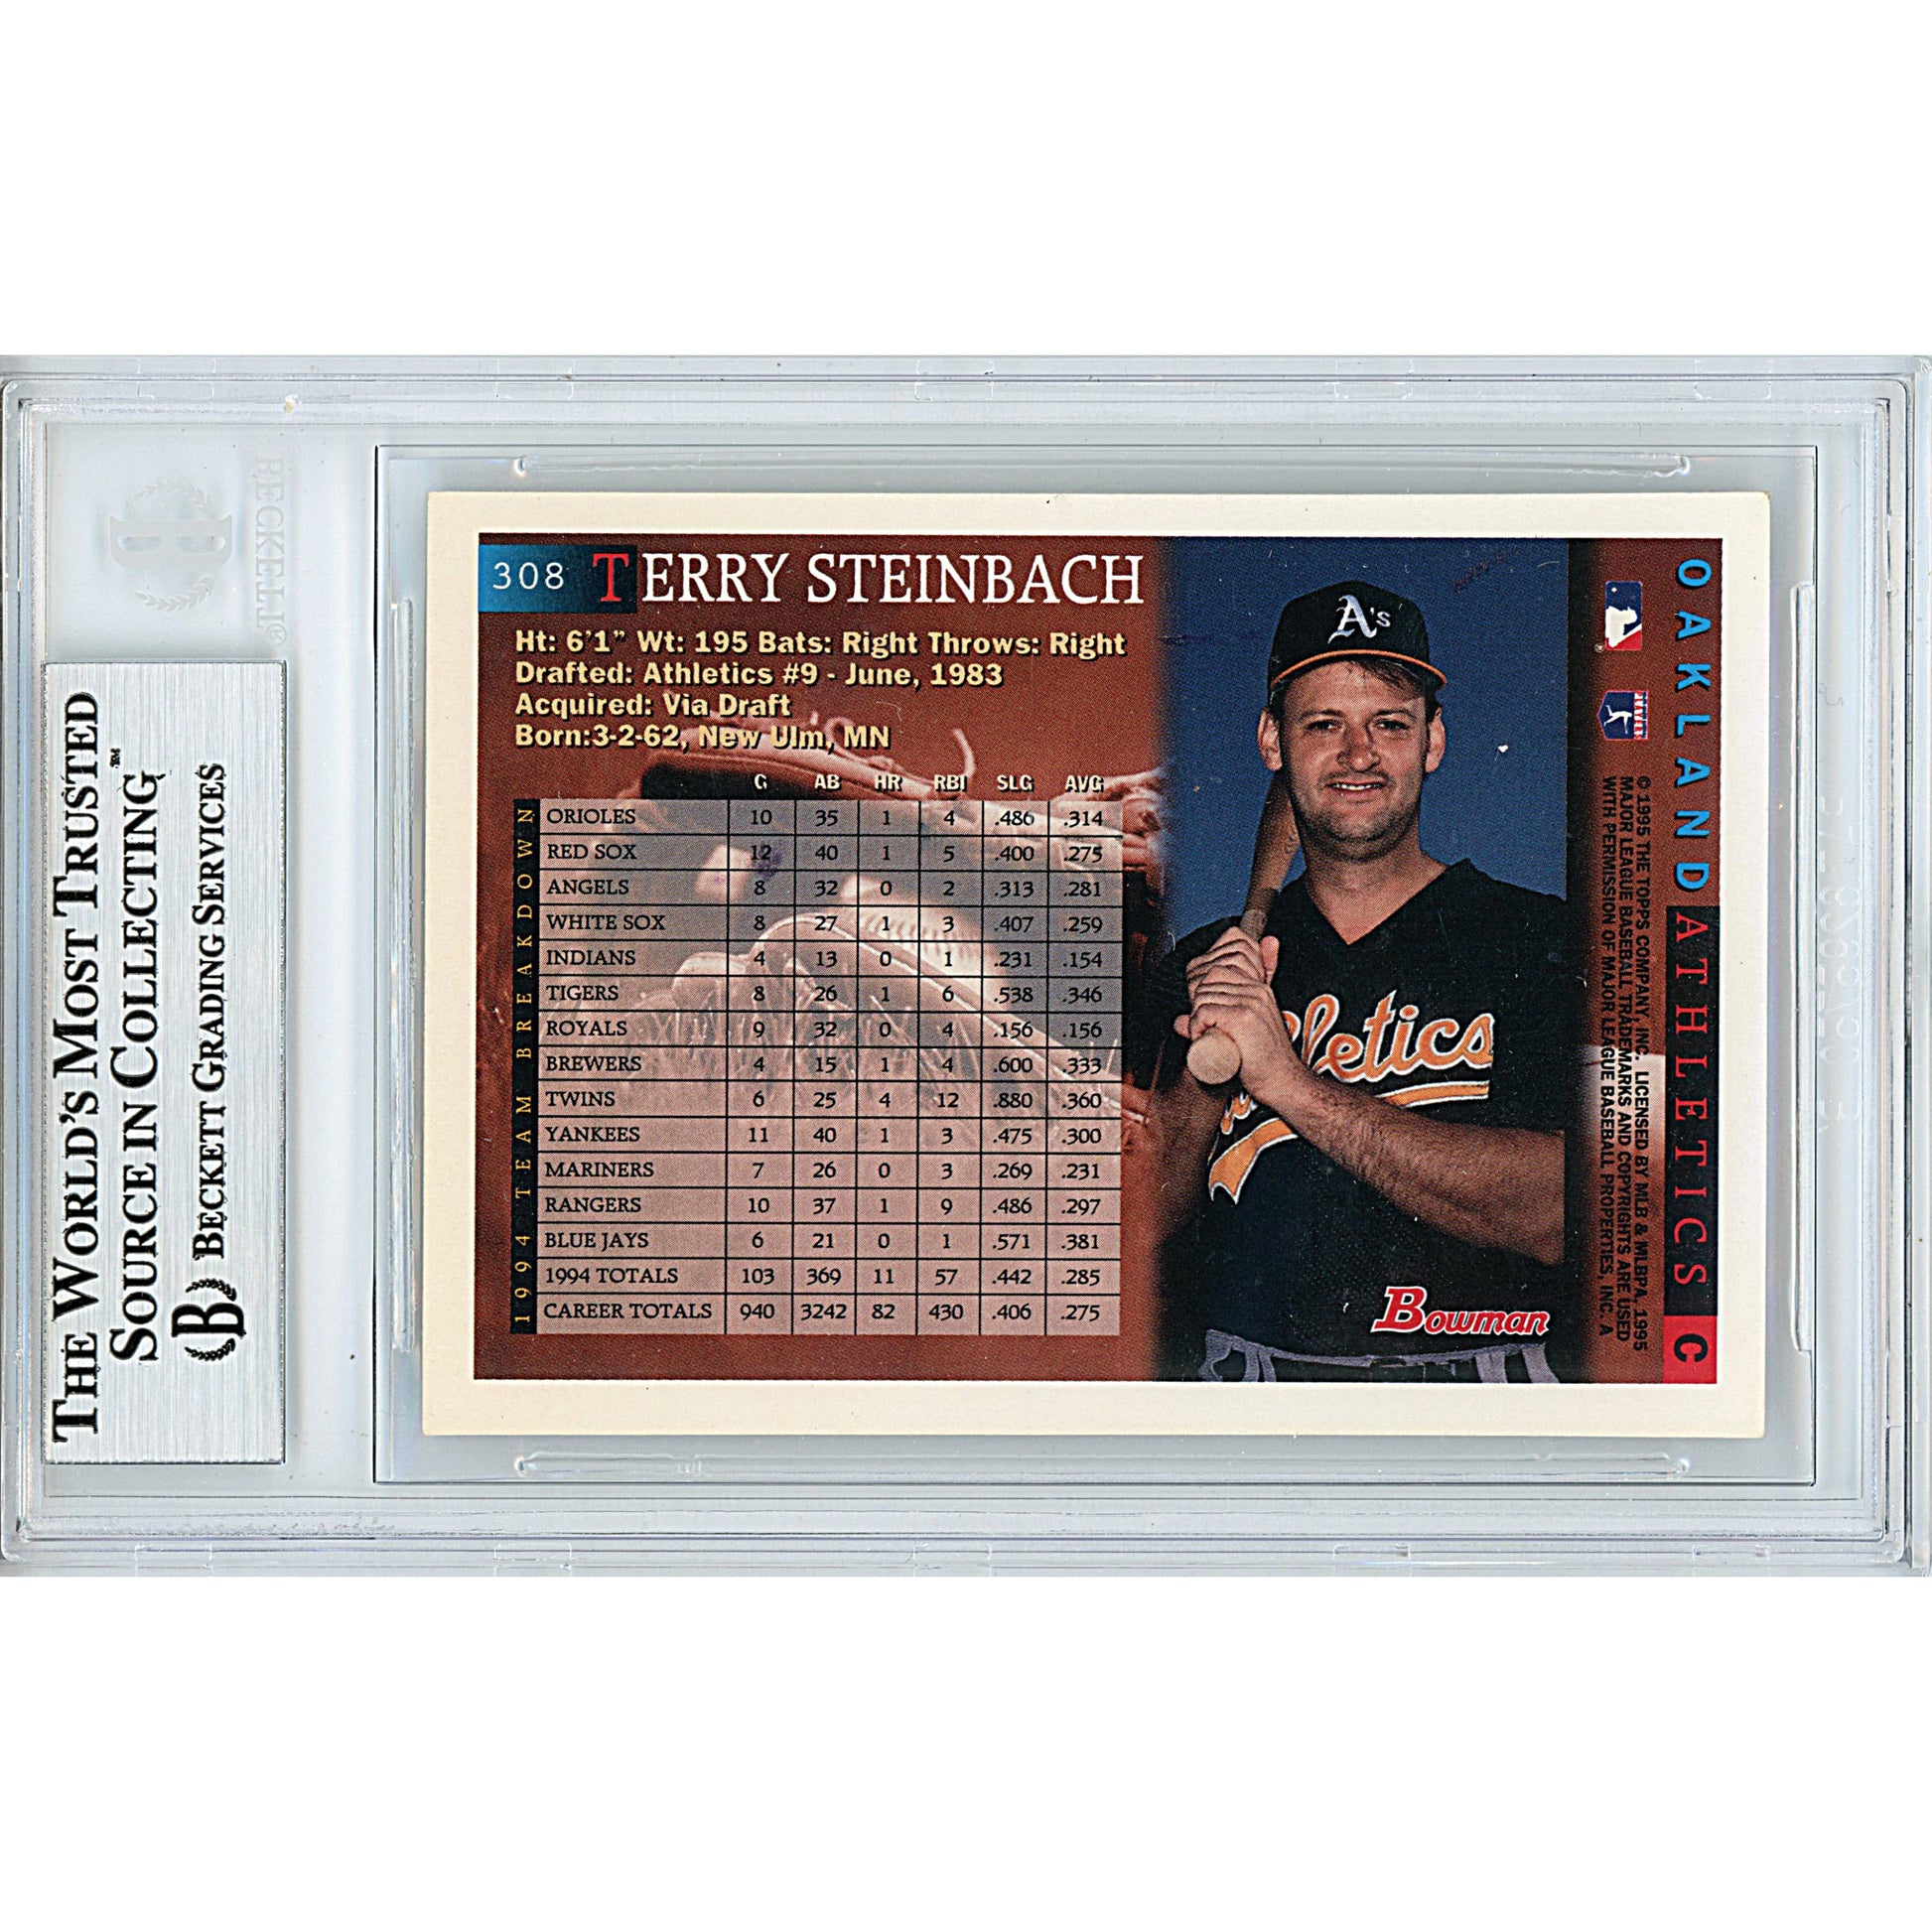 Baseballs- Autographed- Terry Steinbach Signed Oakland Athletics A's 1995 Bowman Baseball Card Beckett BAS Slabbed 00013191138 - 102